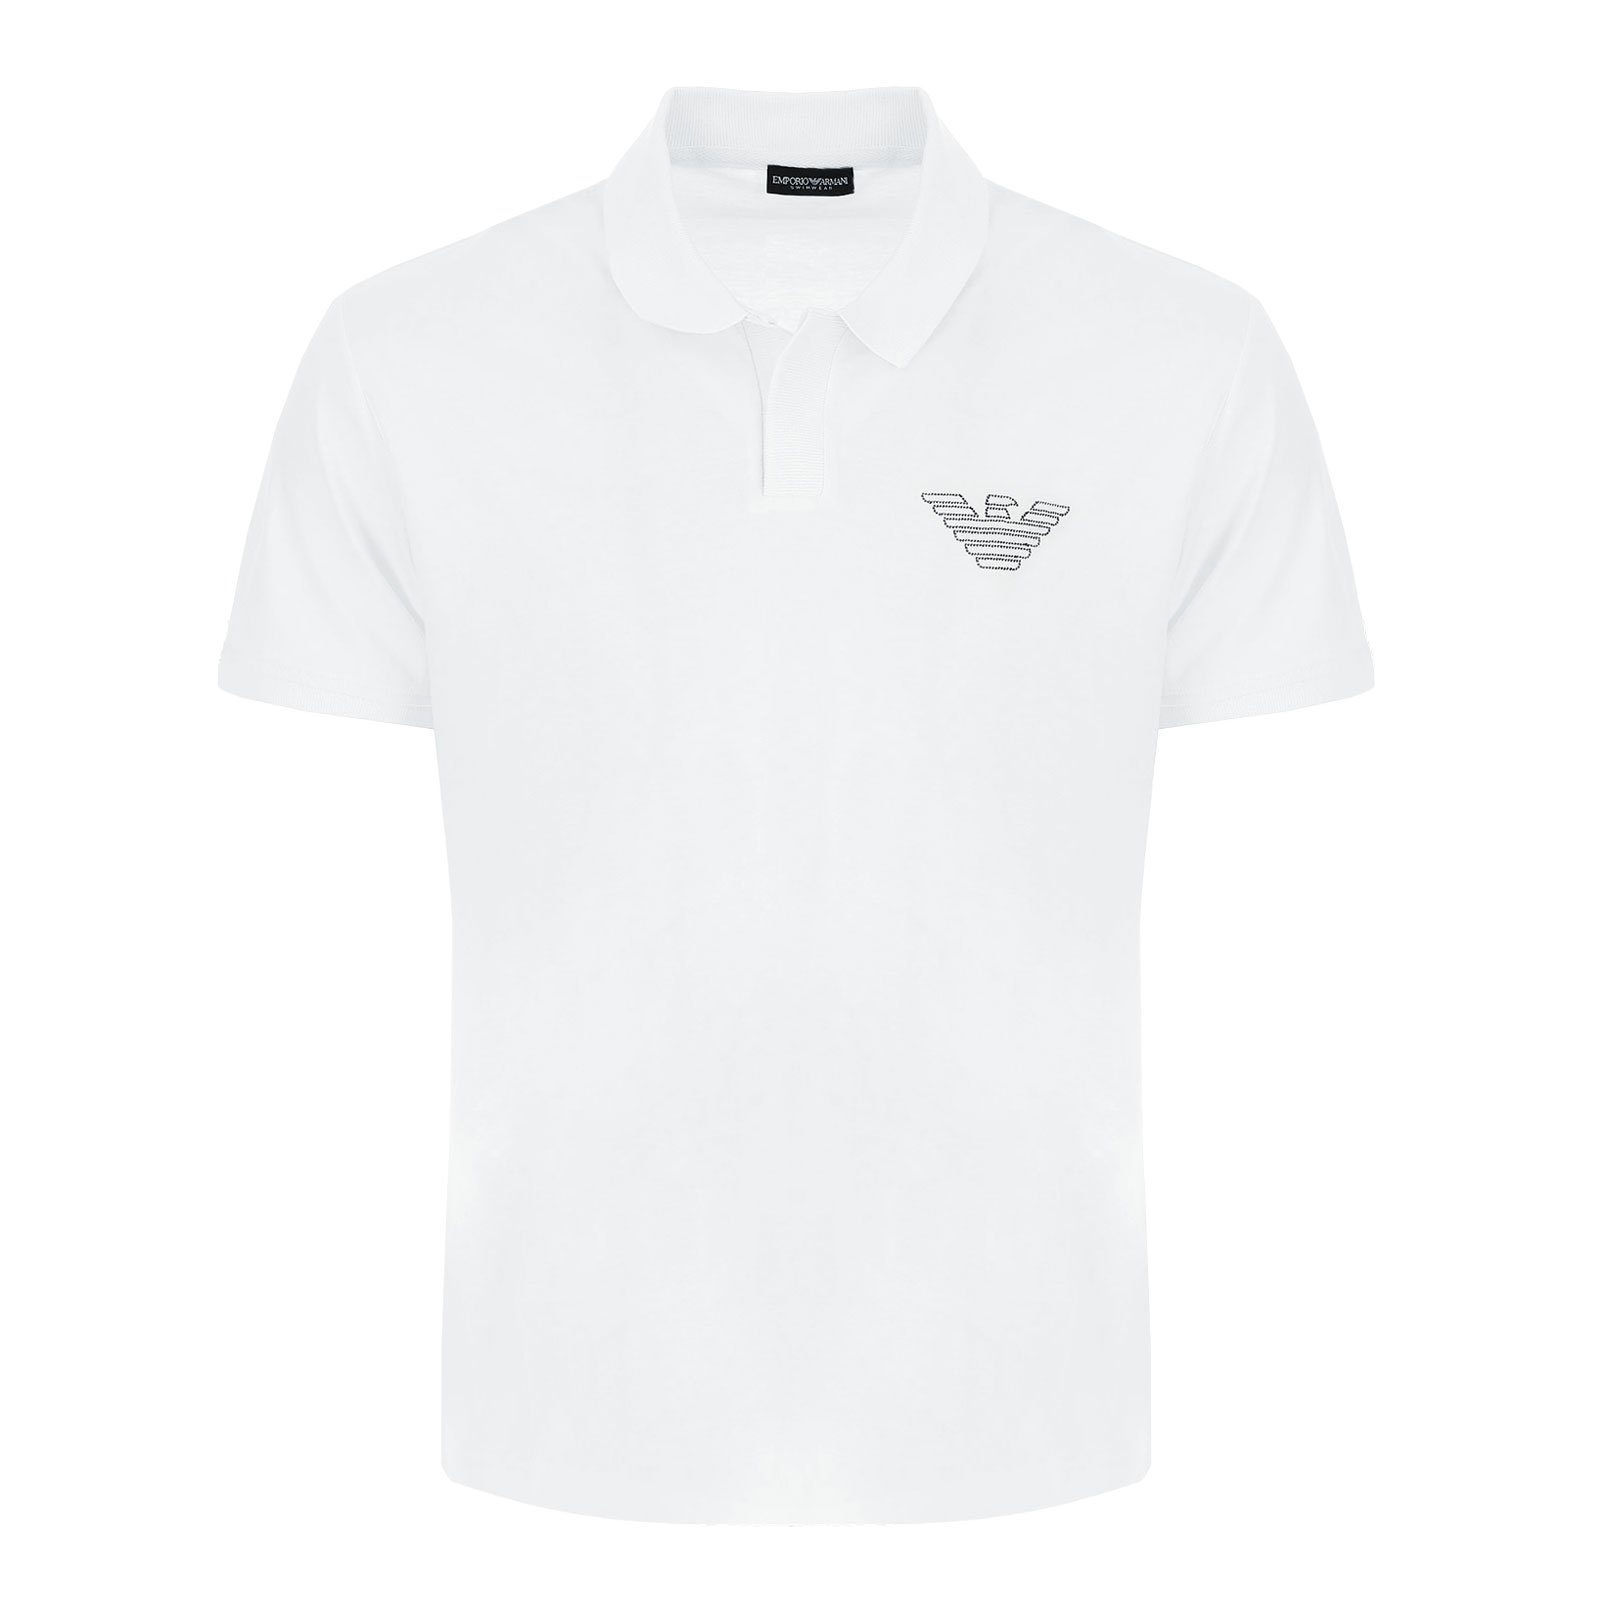 auf Logo Poloshirt mit white Emporio der Brust Armani Beachwear Polo 00010 großem